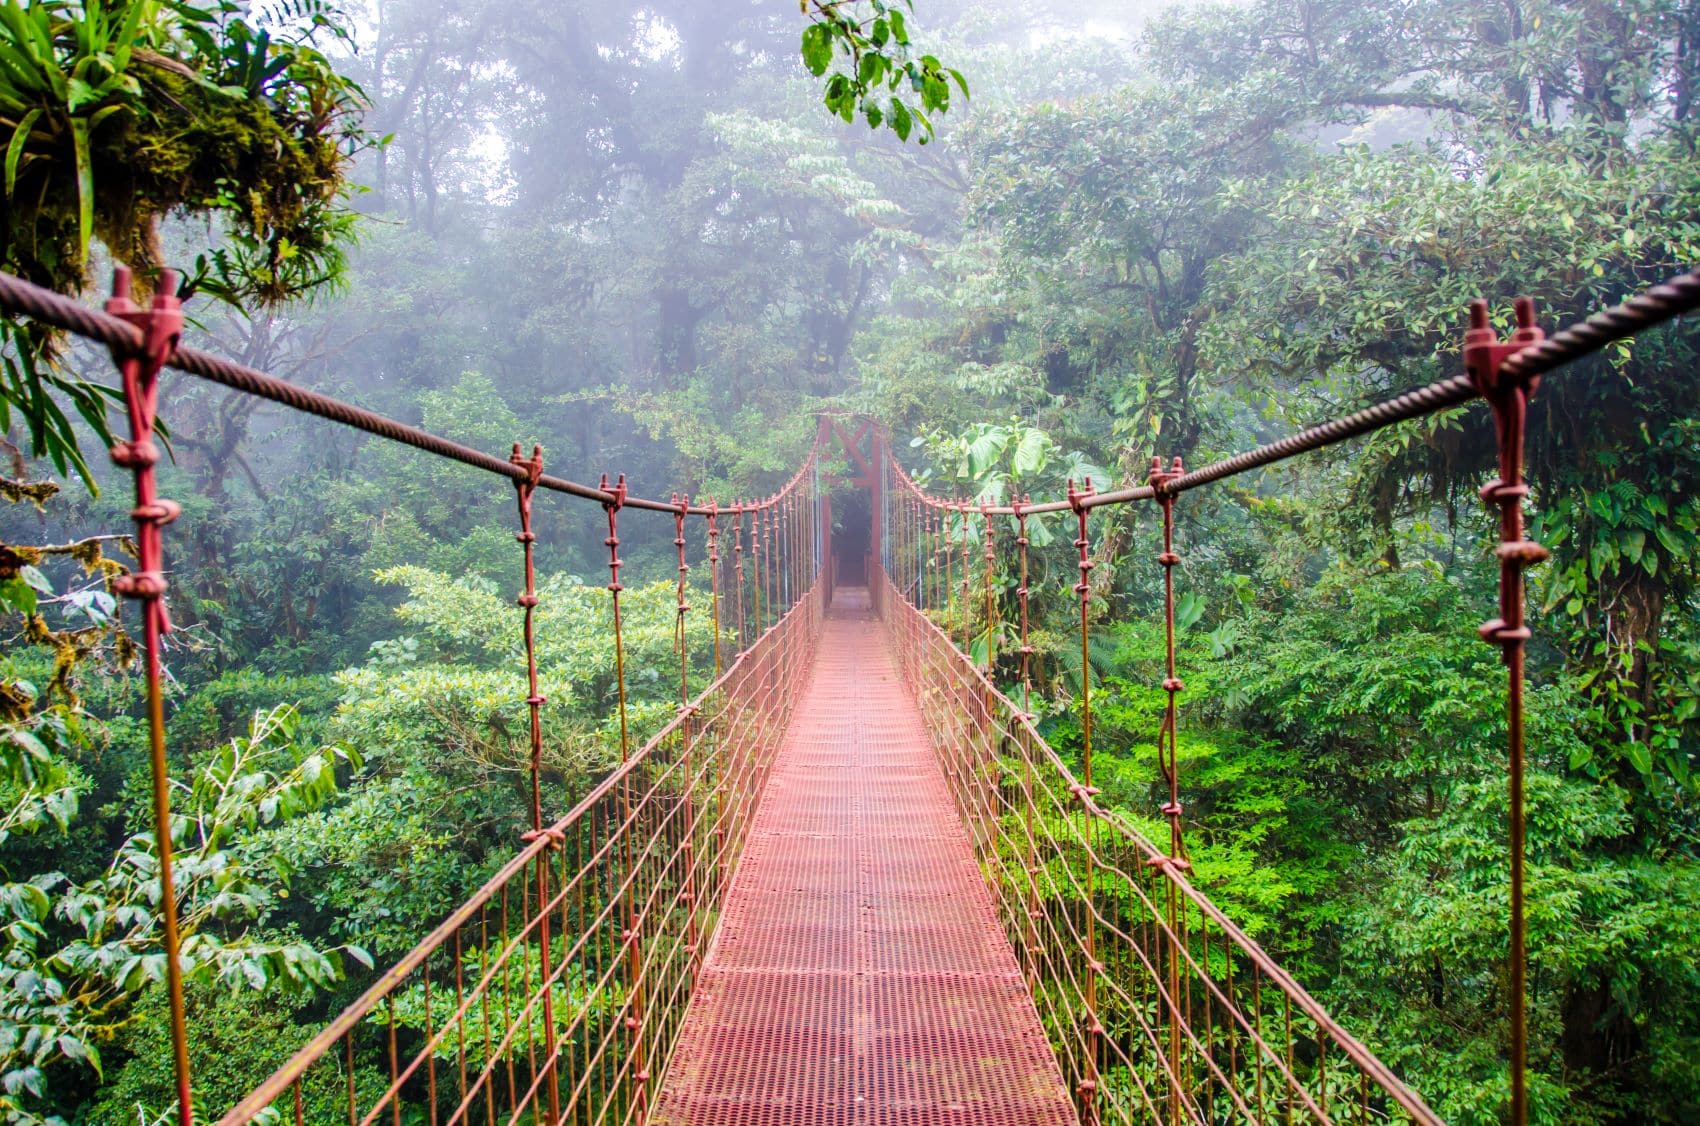 Hängebrücke im Urwald in Costa Rica 